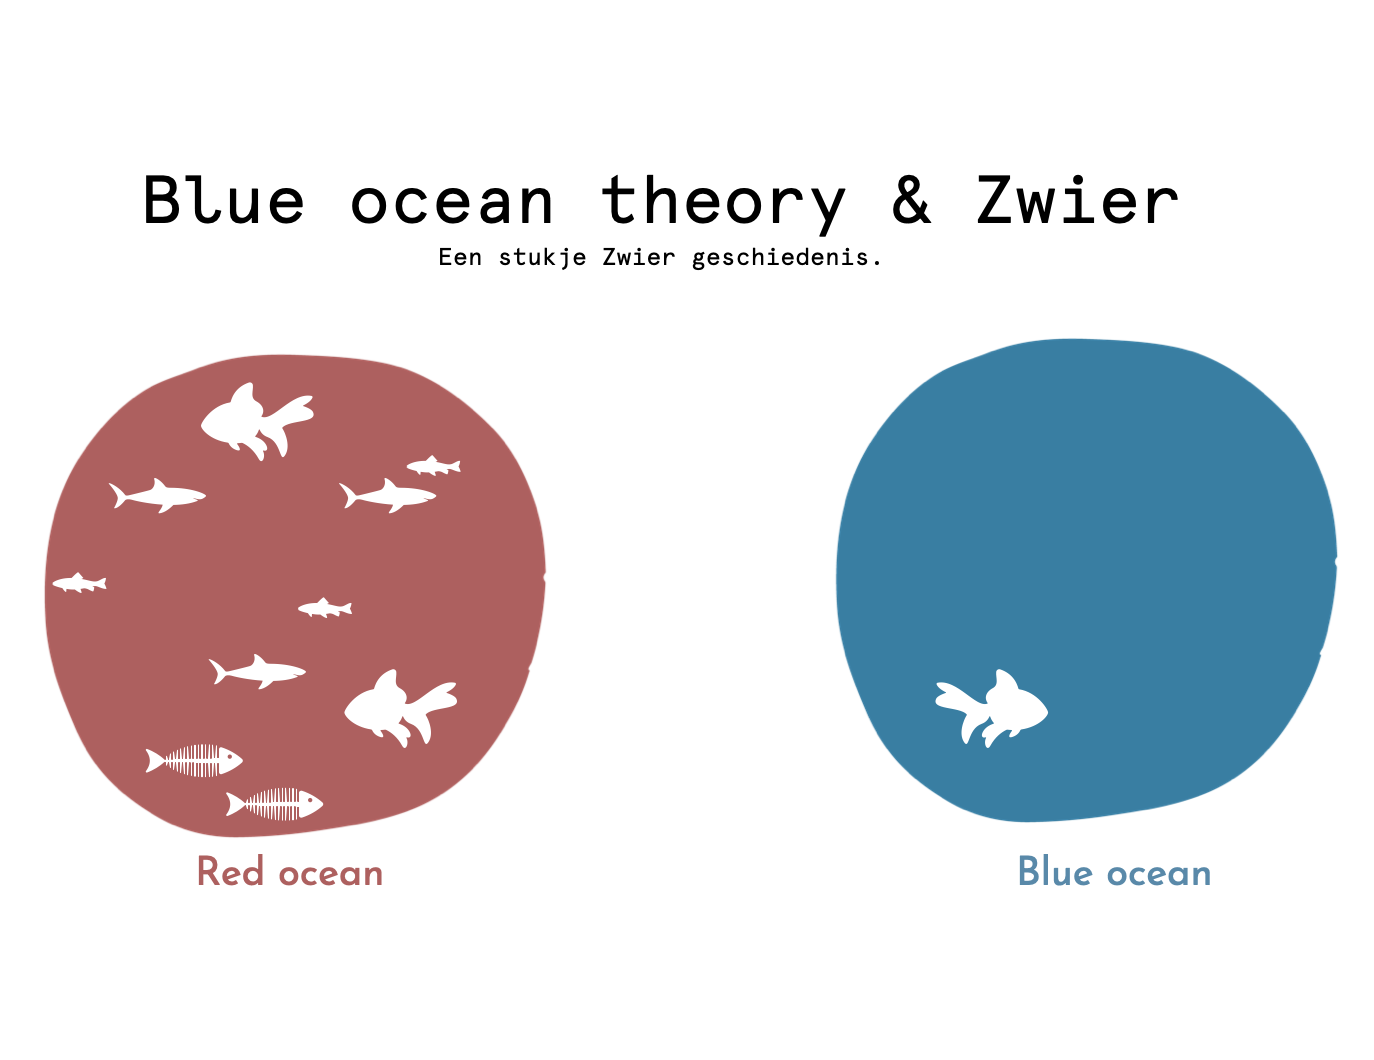 Zwier & the blue ocean theory